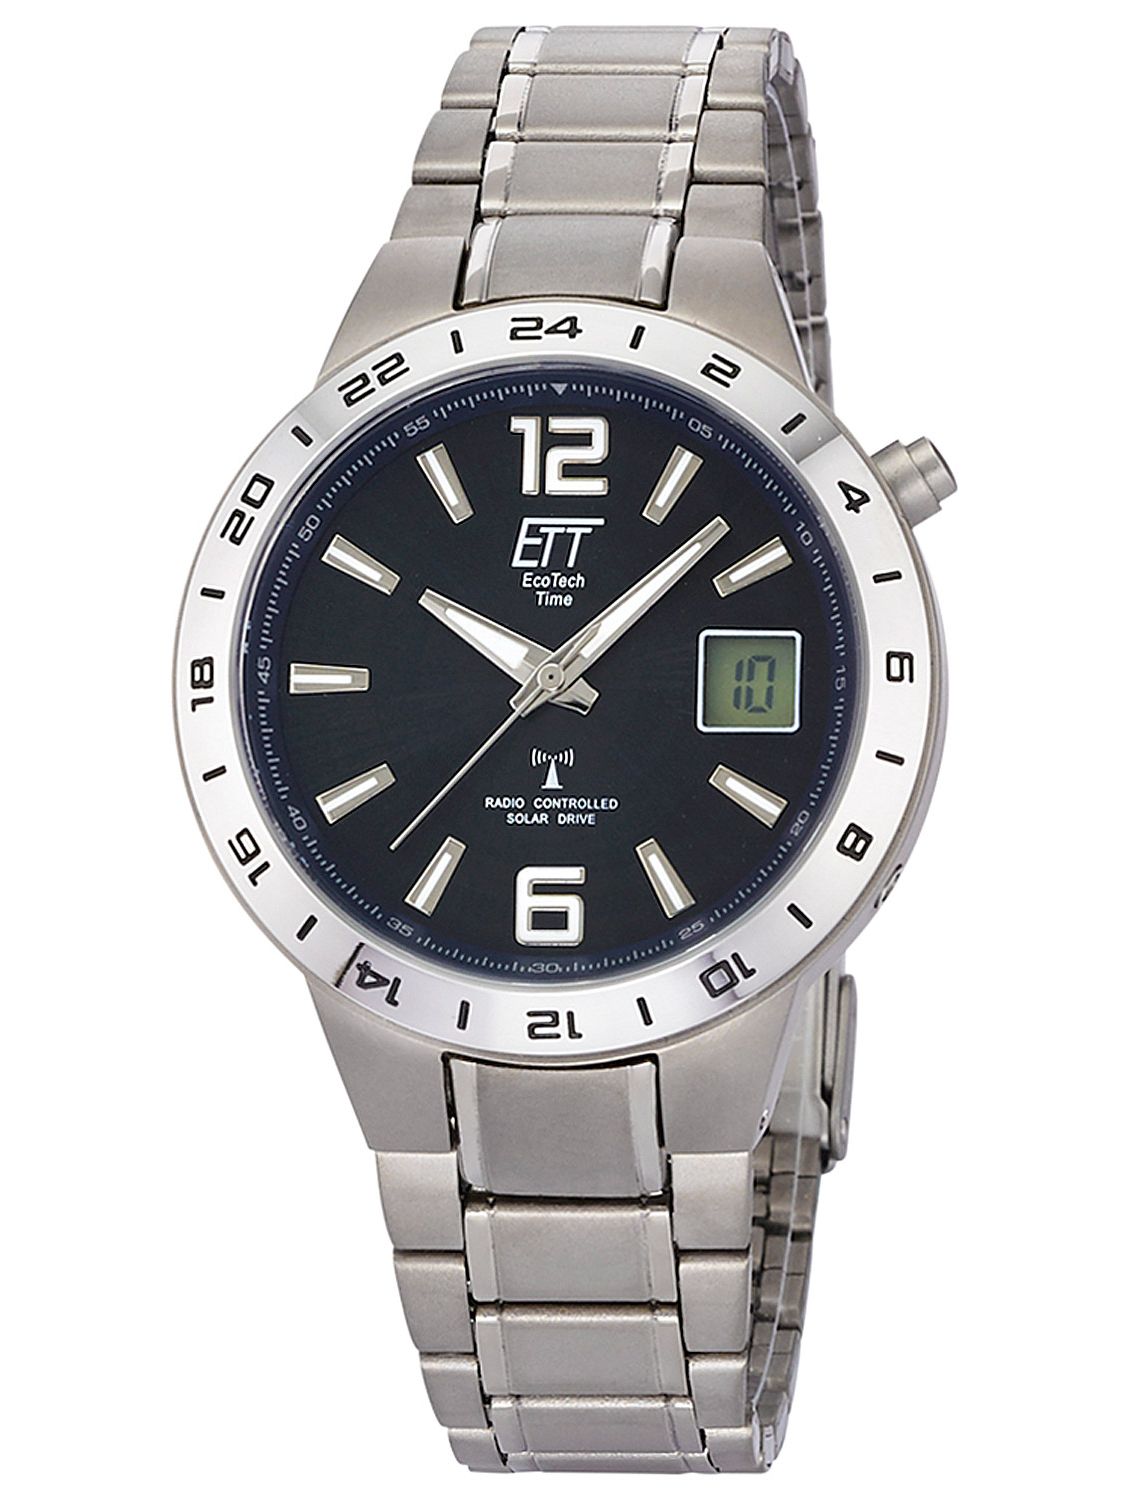 ETT Eco Tech Time Solar uhrcenter Watch Radio-Controlled • EGT-11411-41M Titanium